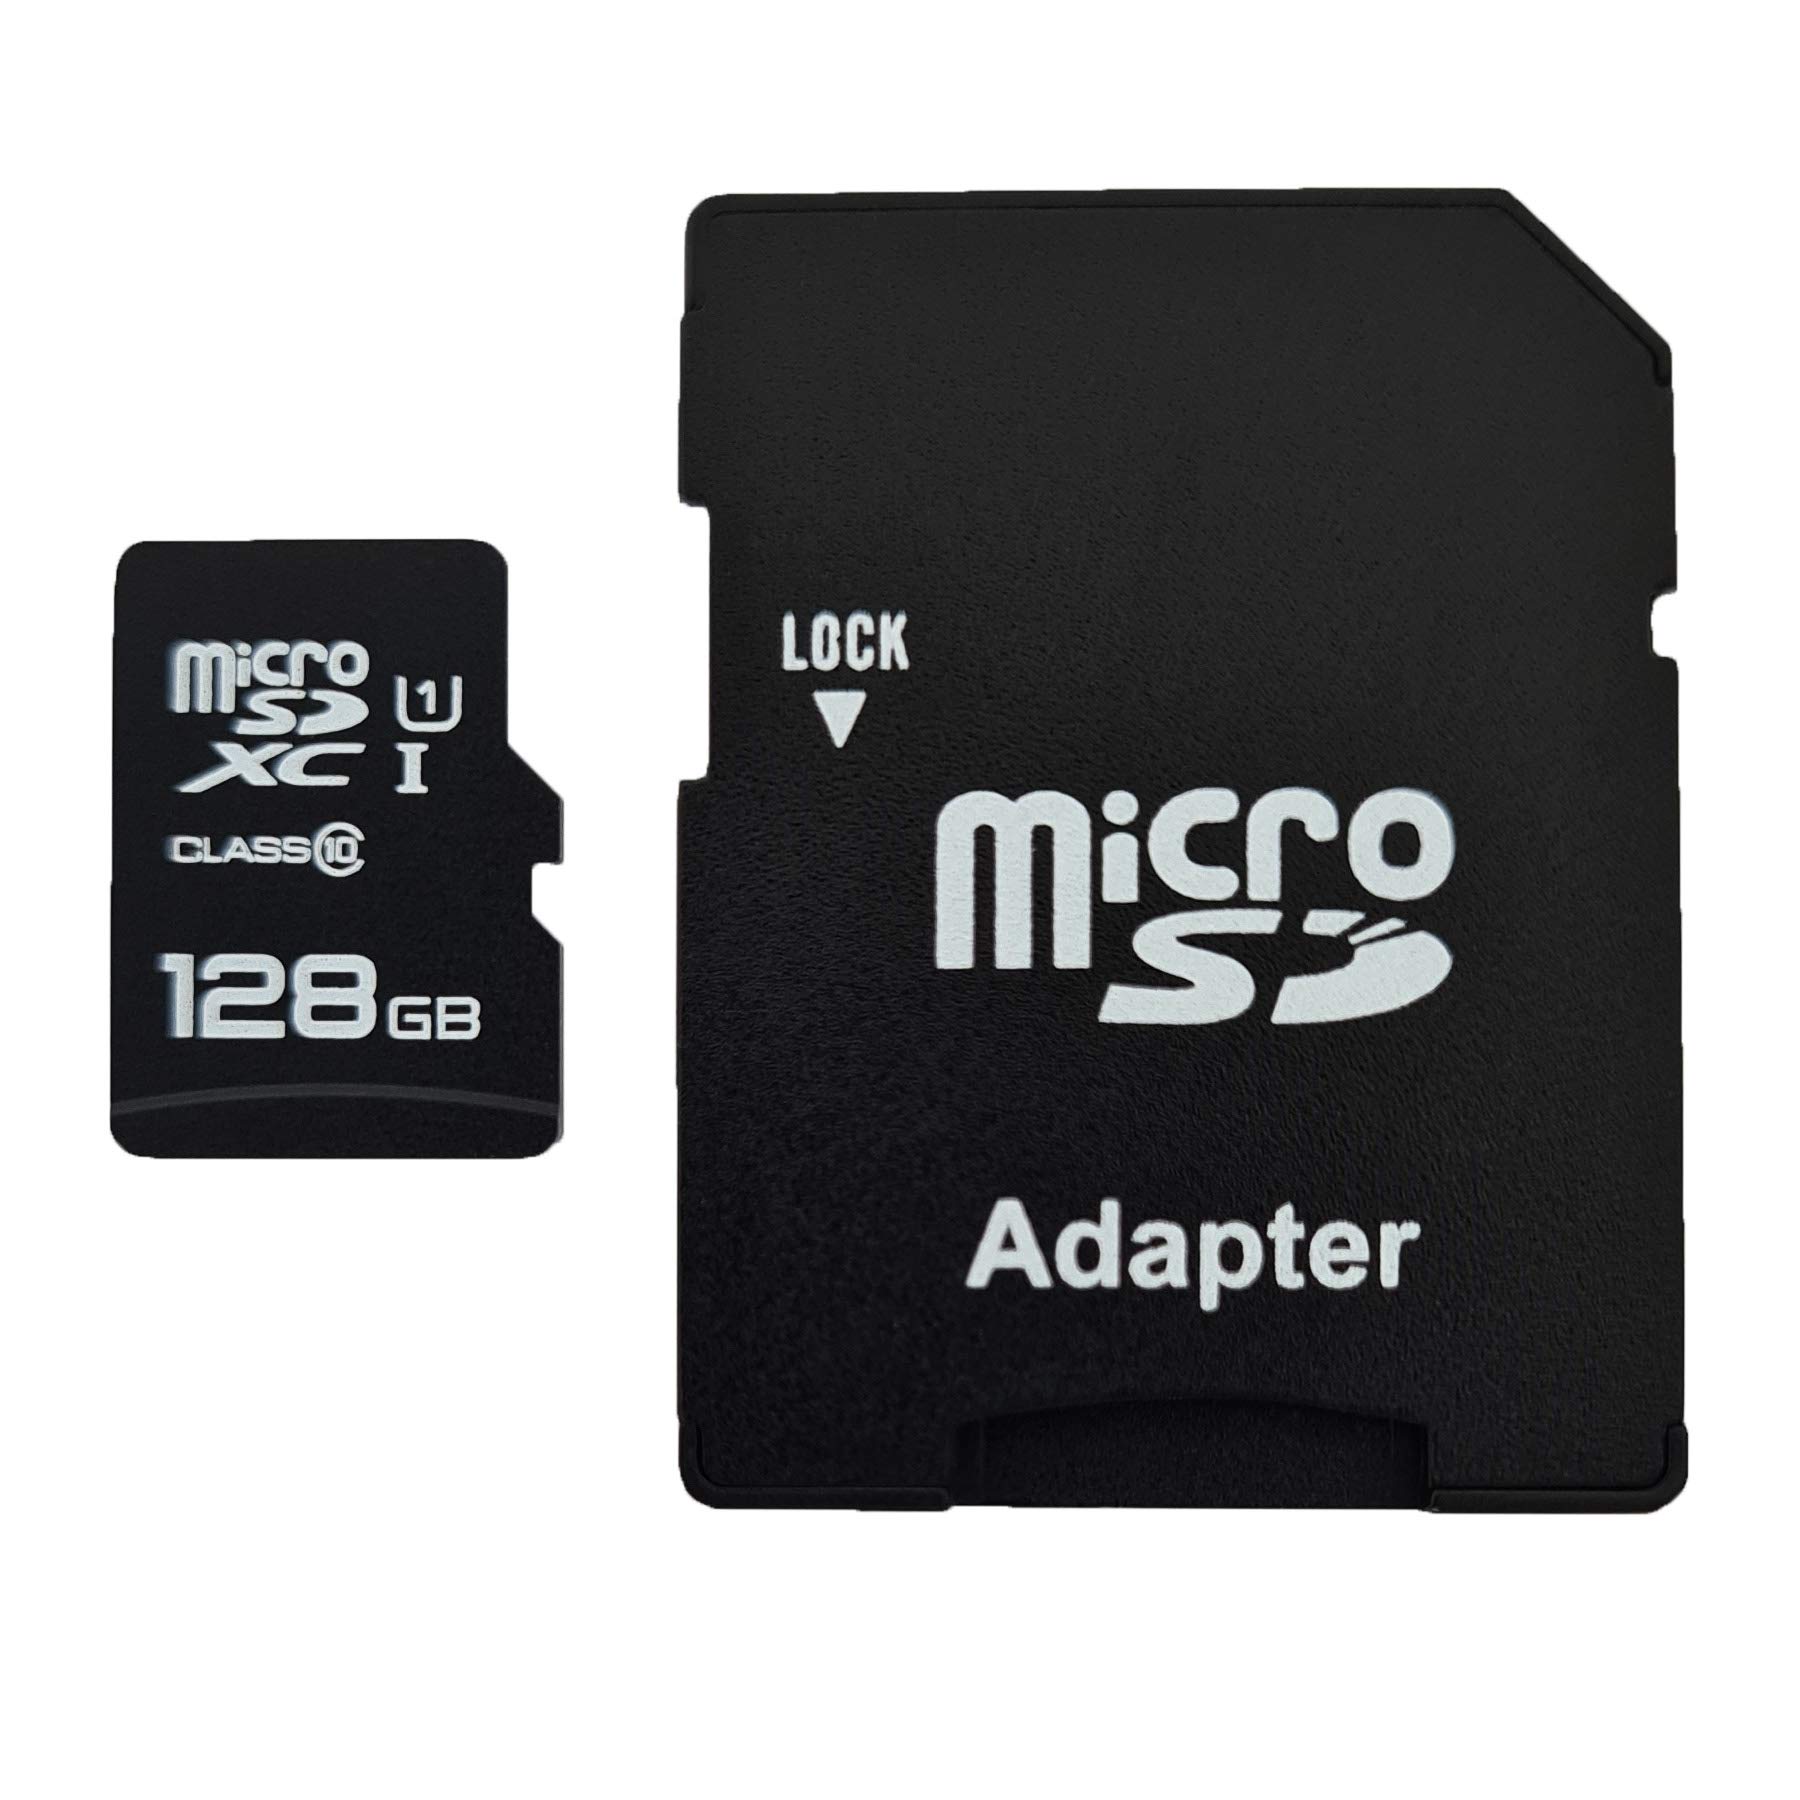 dekoelektropunktde 128GB MicroSDXC Speicherkarte mit Adapter Class 10 kompatibel für Sony Alpha 7R III